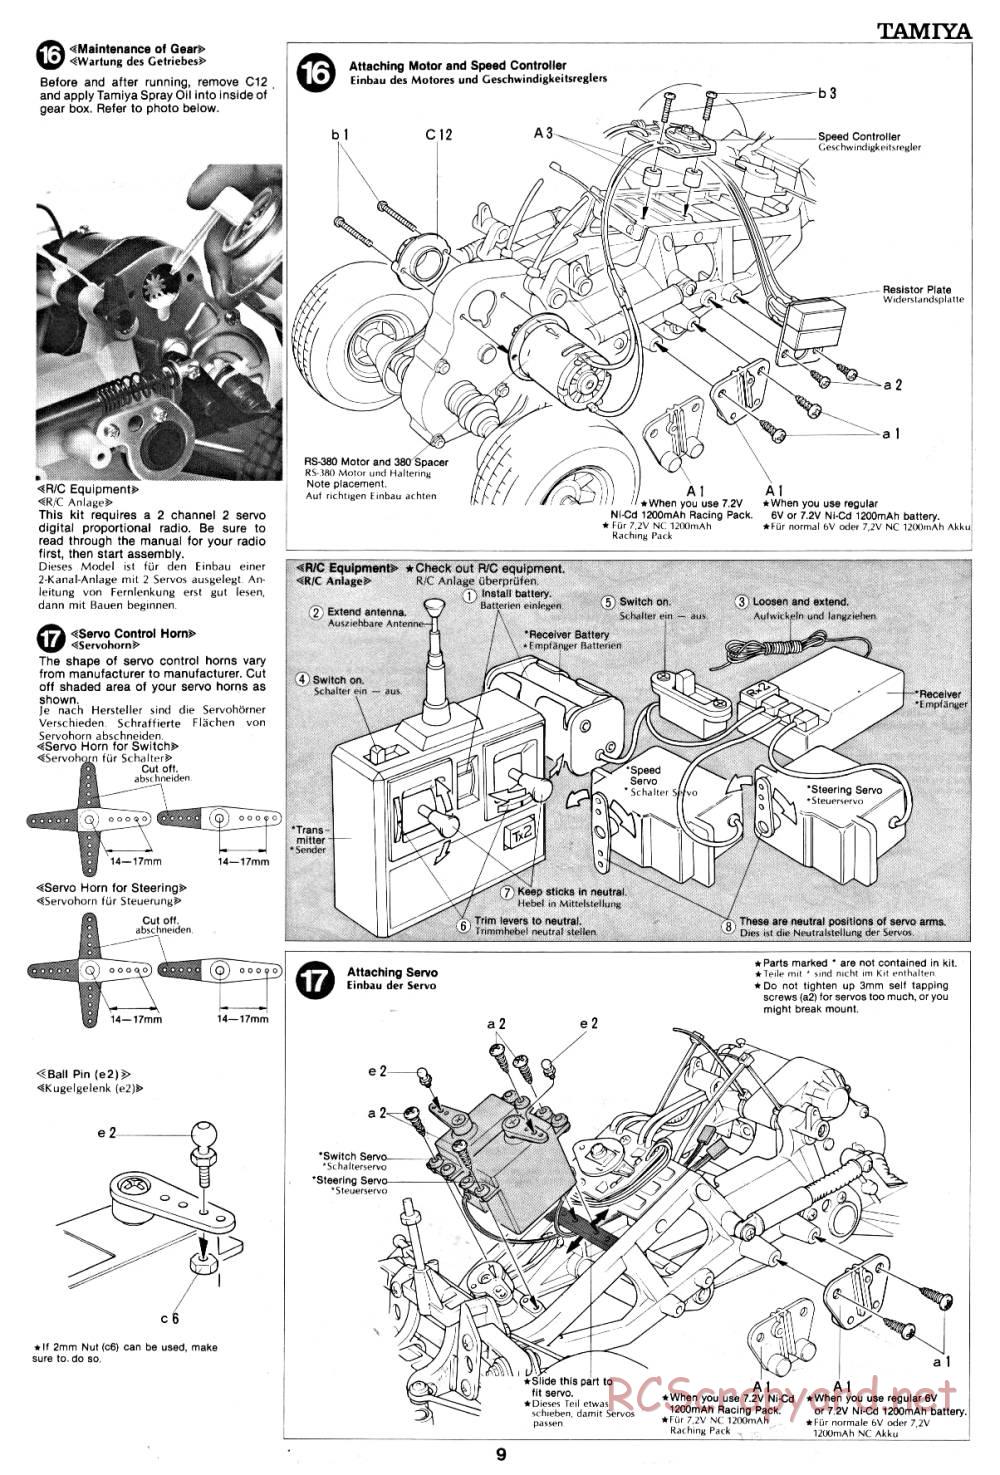 Tamiya - Subaru Brat - 58038 - Manual - Page 9